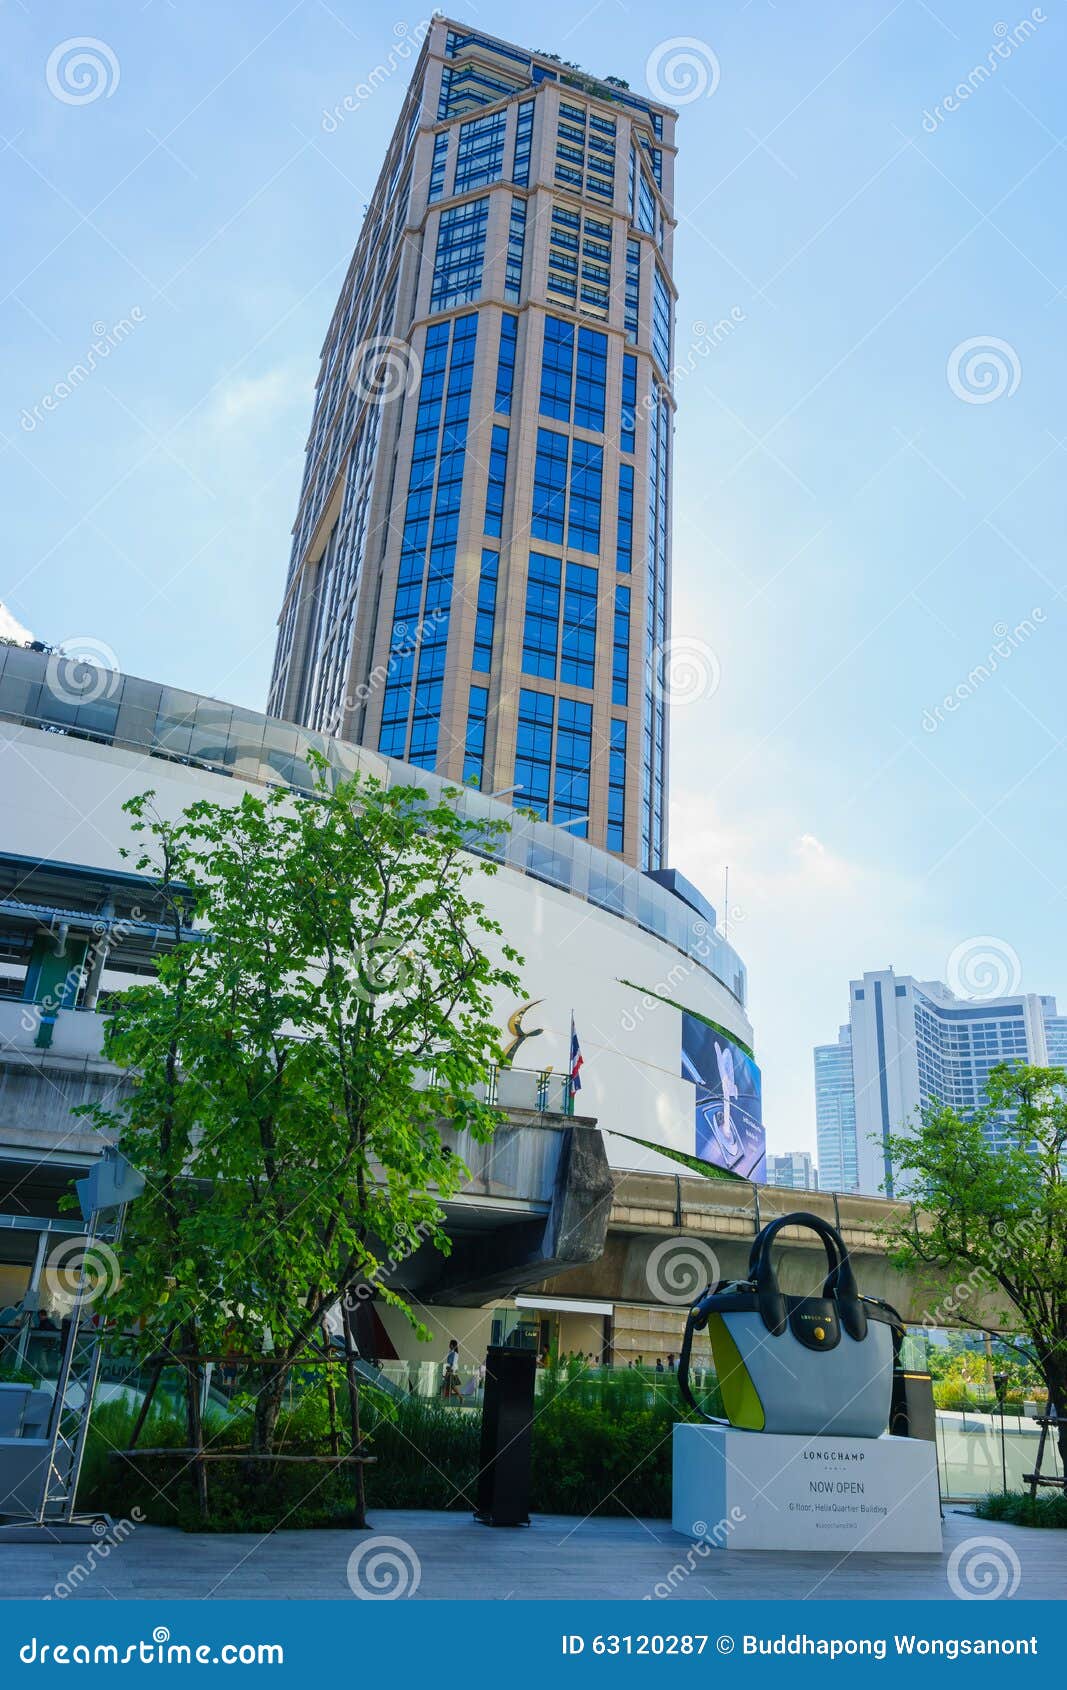 Bangkok Emporium Mall - Helix Em Quartier Shopping Mall - Phrom Phong BTS -  Luxury Shopping Thailand 